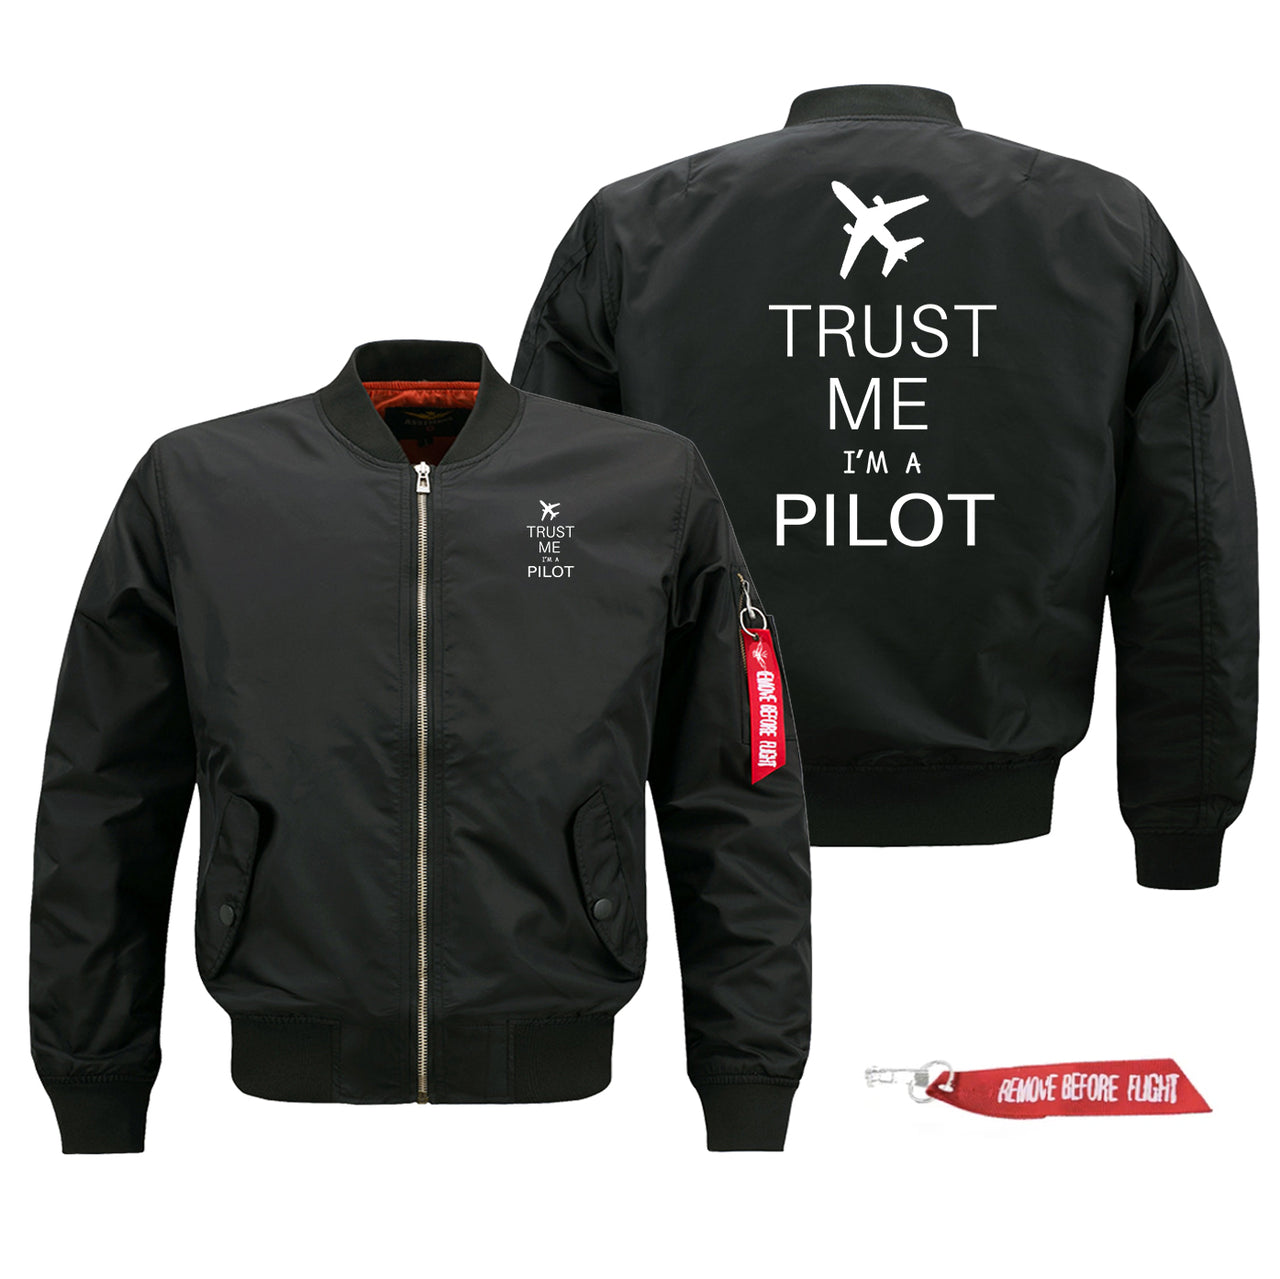 Trust Me I'm a Pilot 2 Designed Pilot Jackets (Customizable)